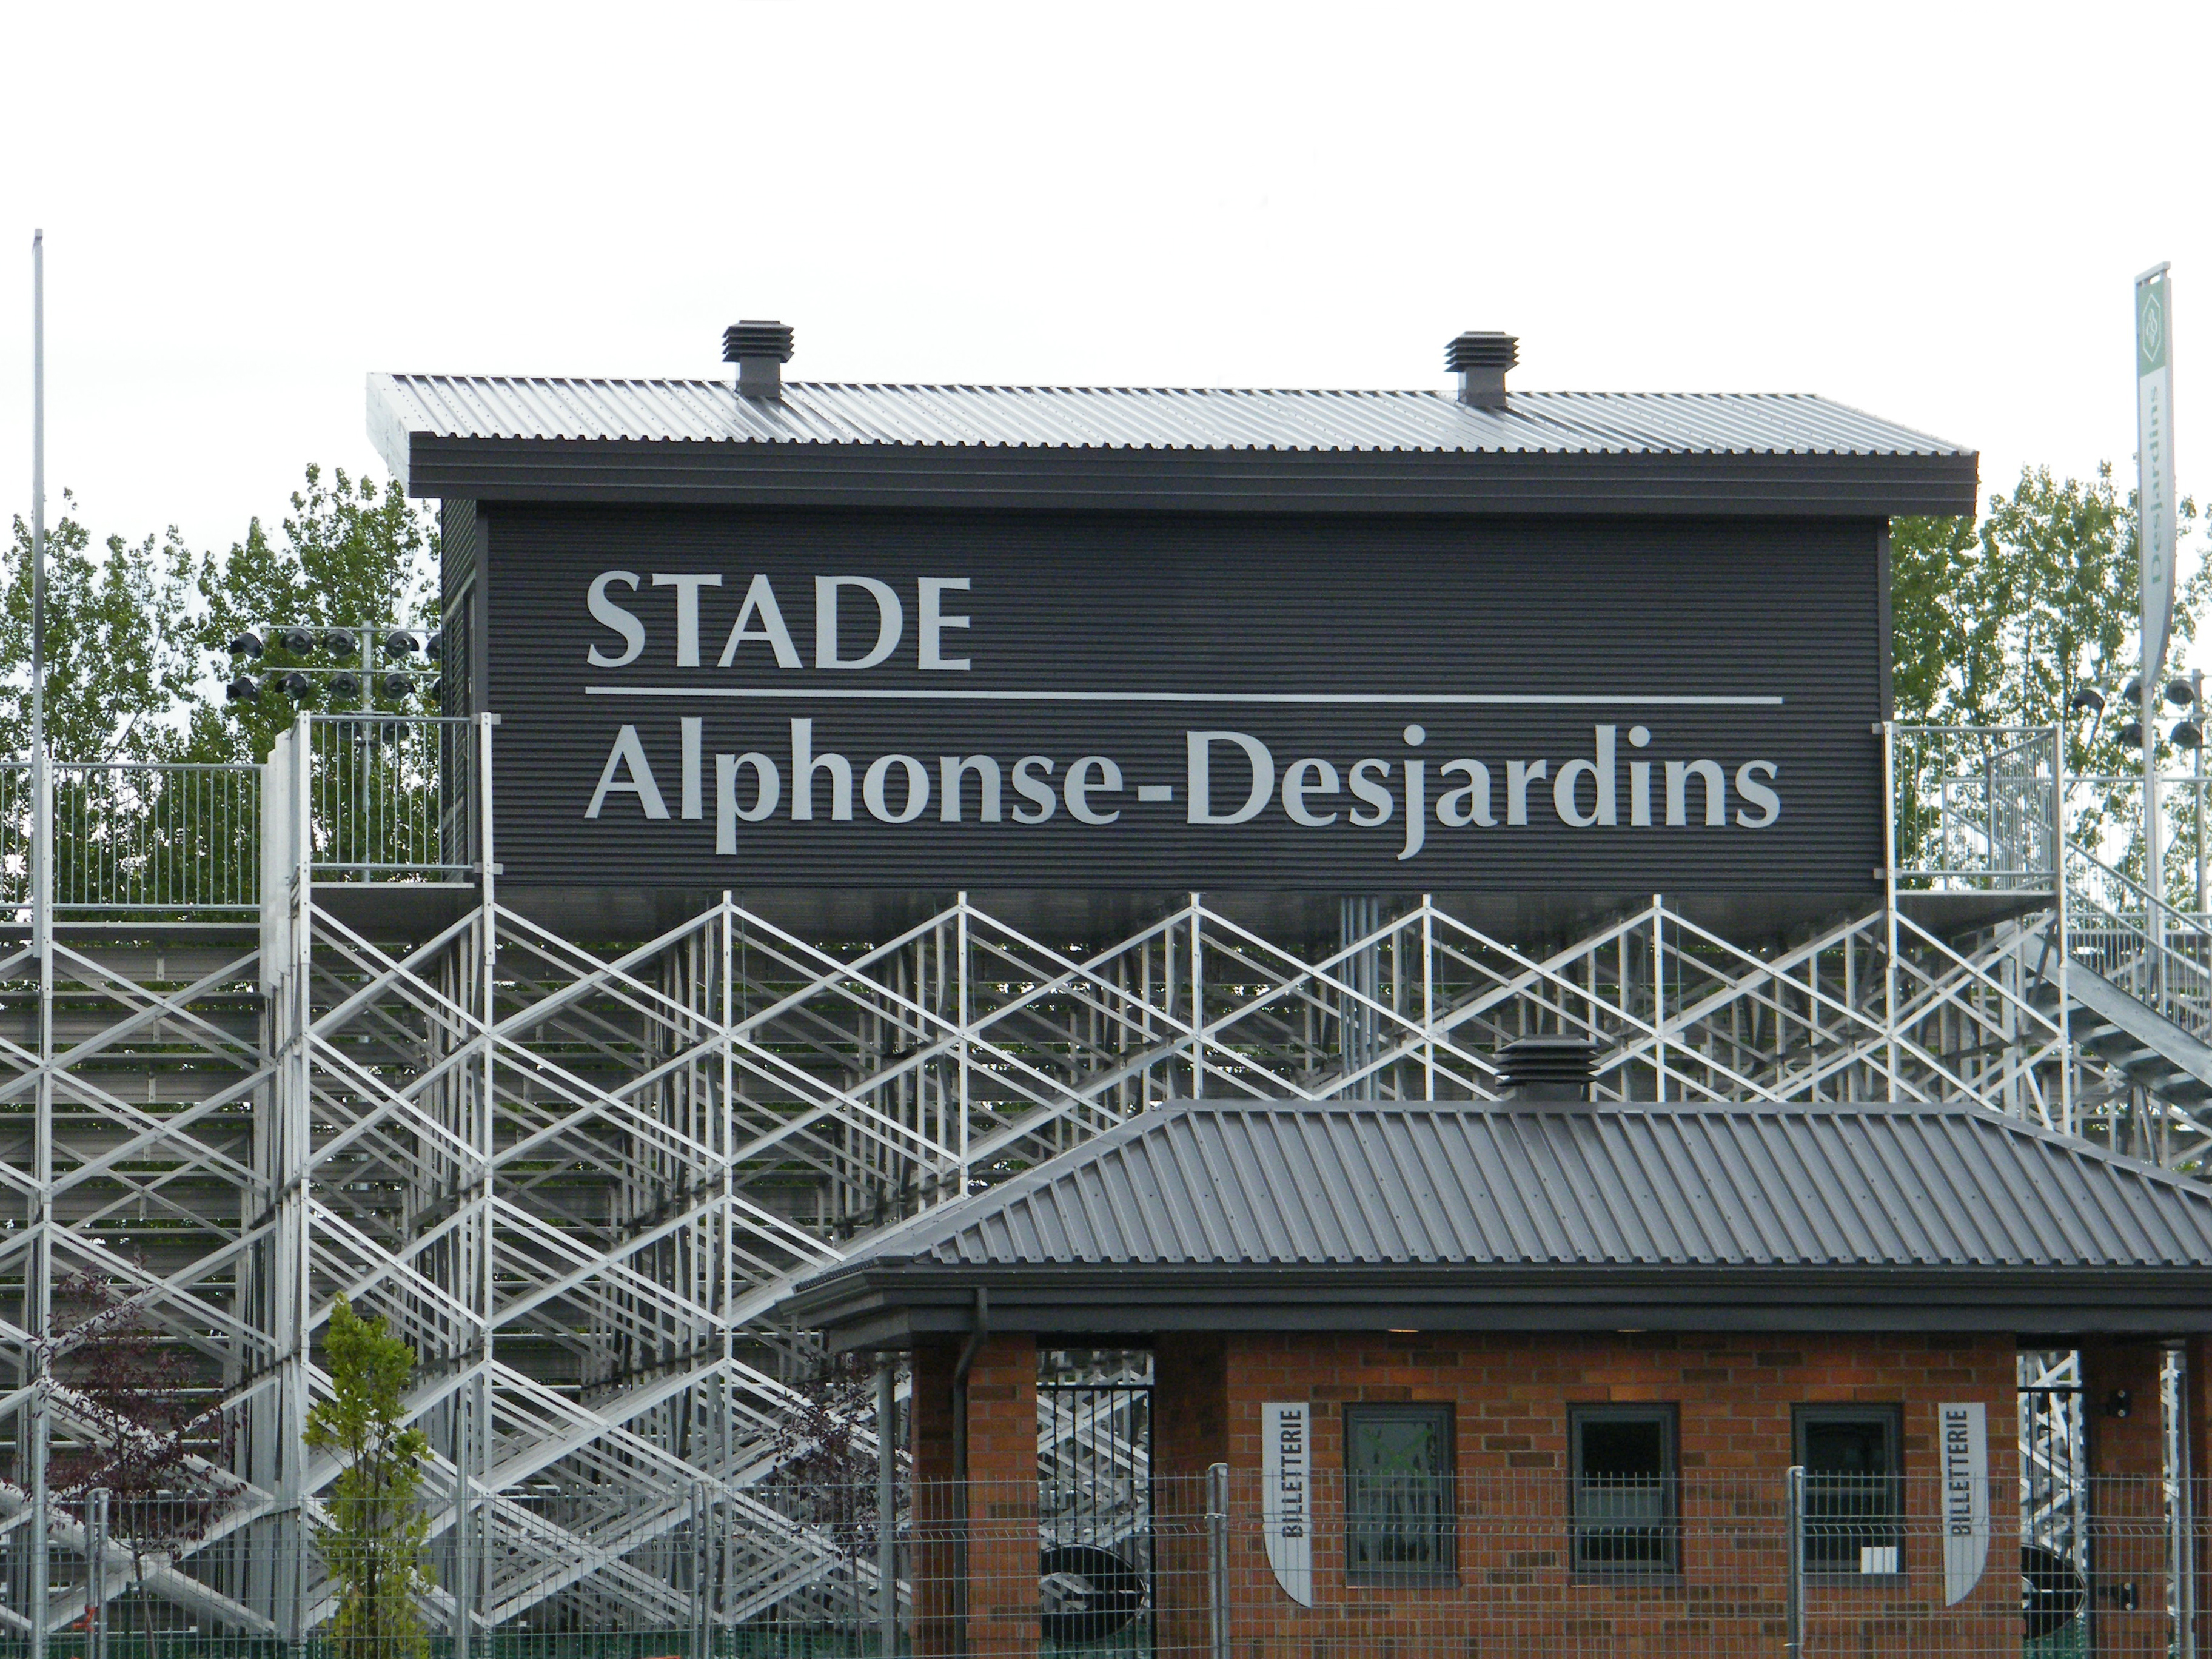 Stade Alphonse-Desjardins